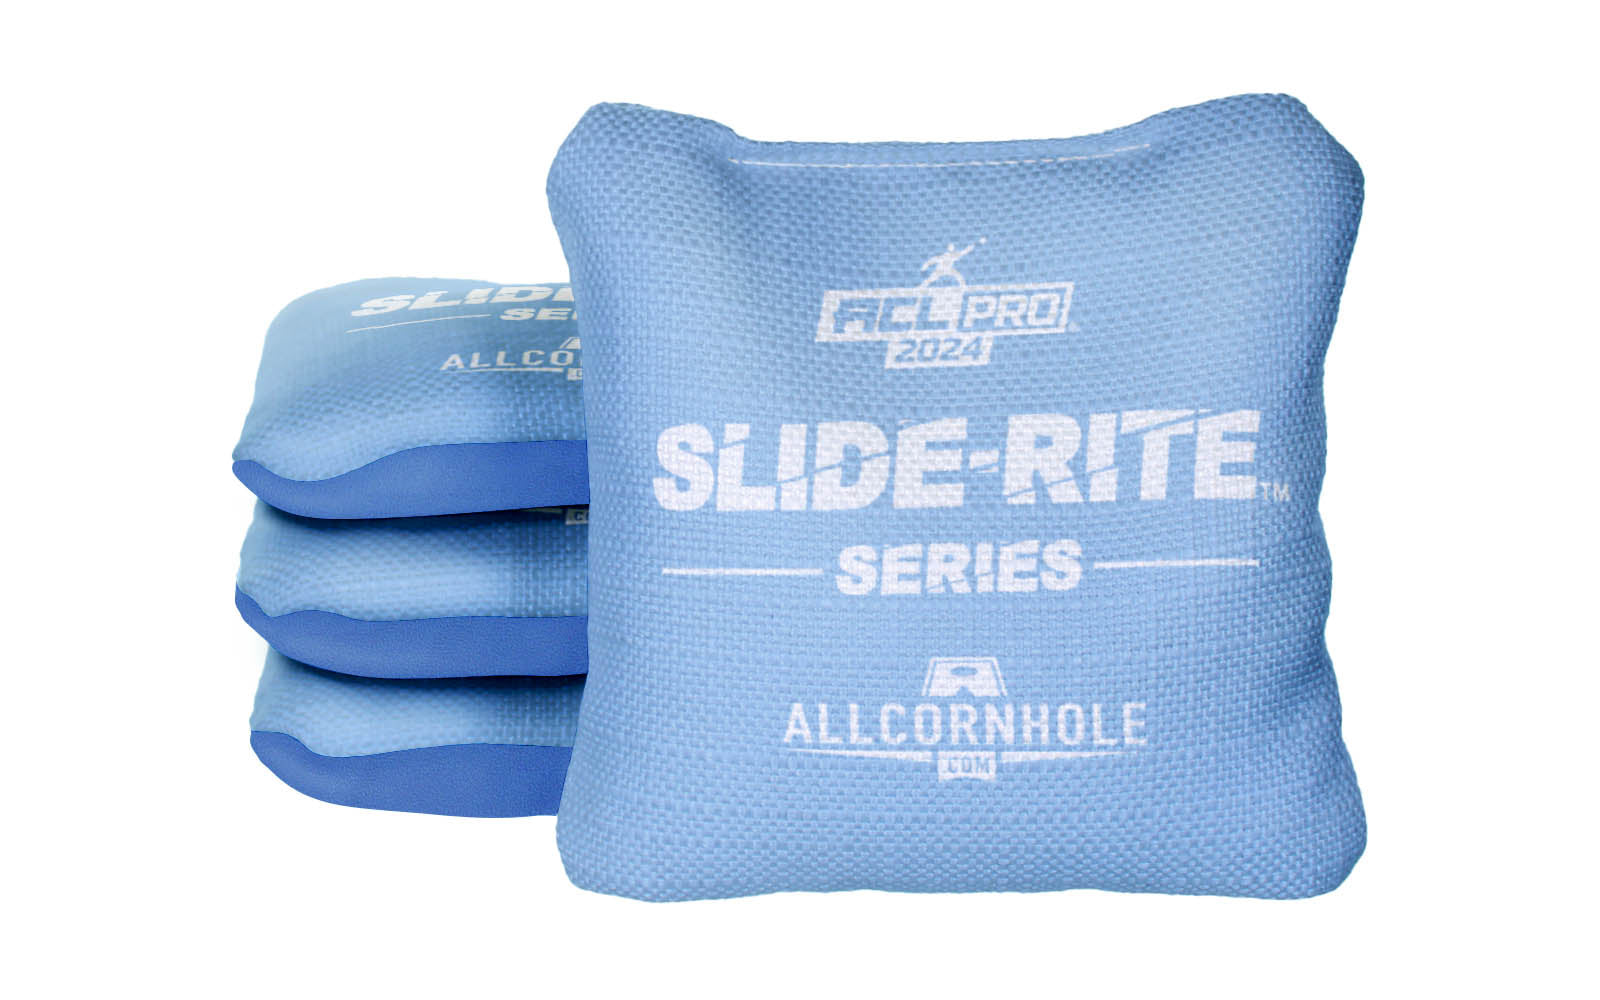 Officially Licensed Collegiate Cornhole Bags - AllCornhole Slide Rite - Set of 4 - University of North Carolina